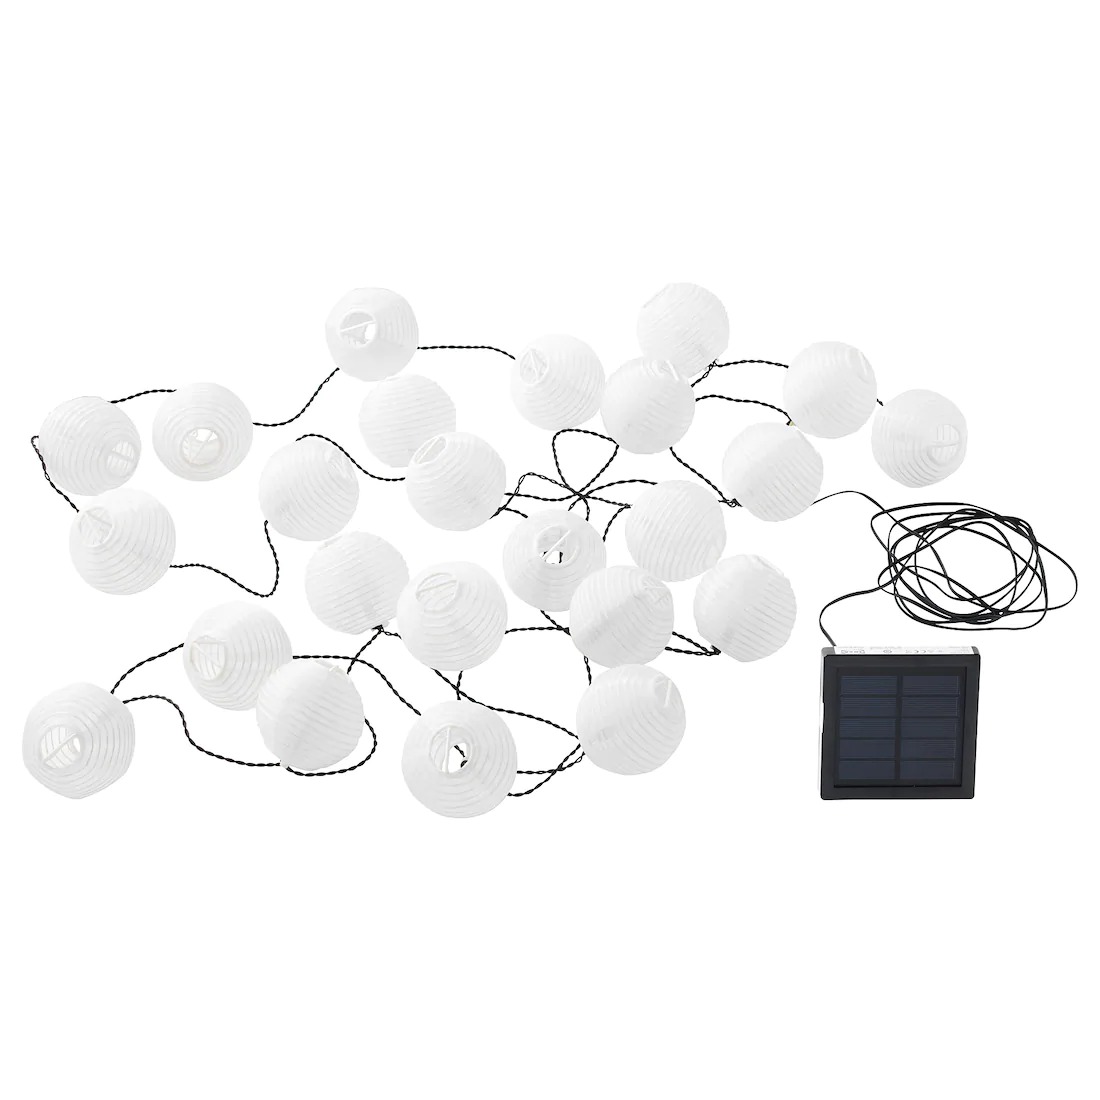 【IKEA Original】SOLARVET -ソラールヴェート- LEDライトチェーン 全24球 屋外用 太陽電池式 ボール ホワイト 7.3 m画像